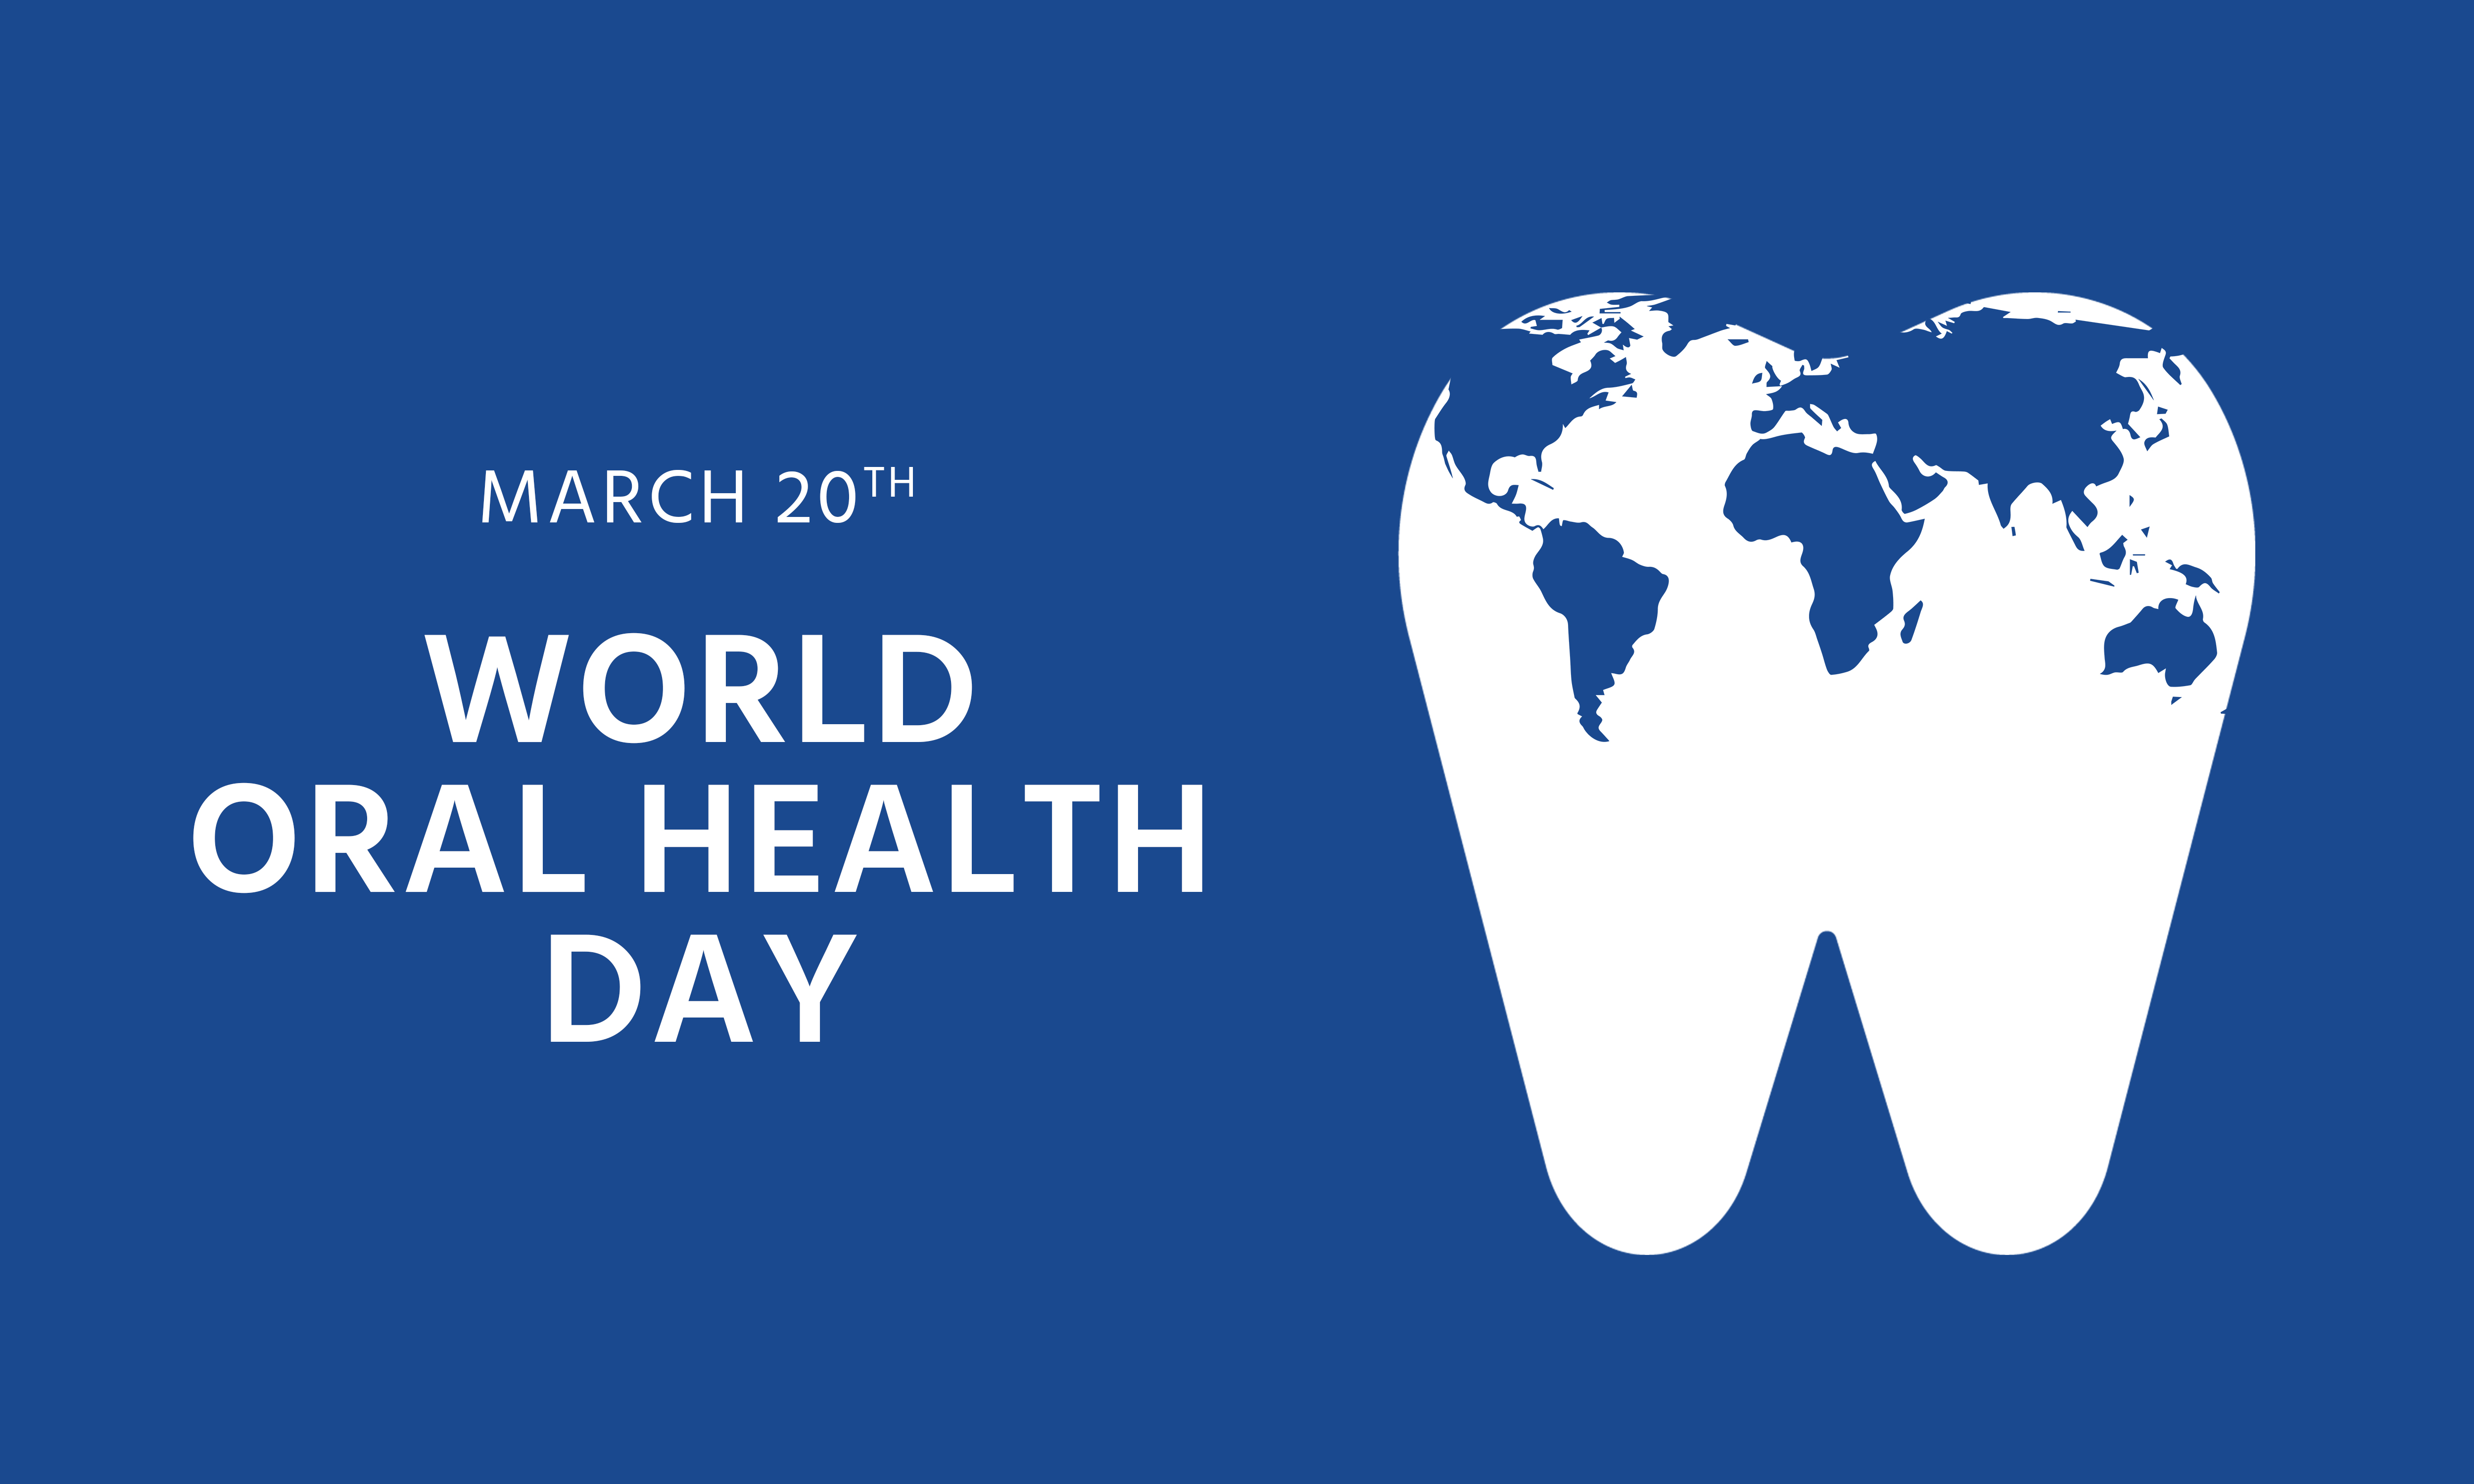 bonyf raises awareness on World Oral Health Day Bonyf